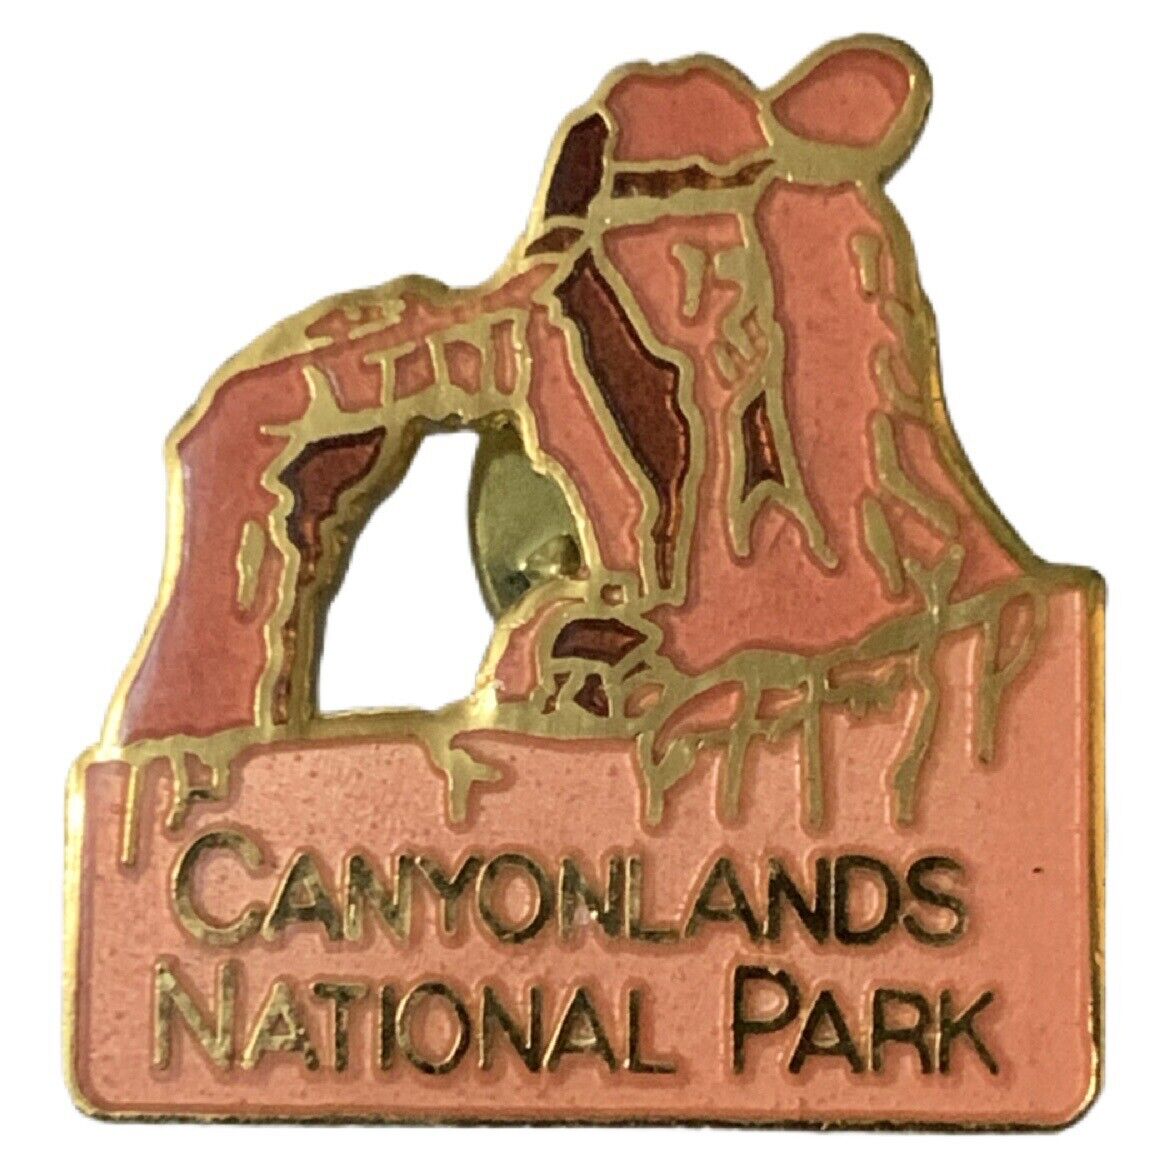 Vintage Canyonlands National Park Travel Souvenir Pin